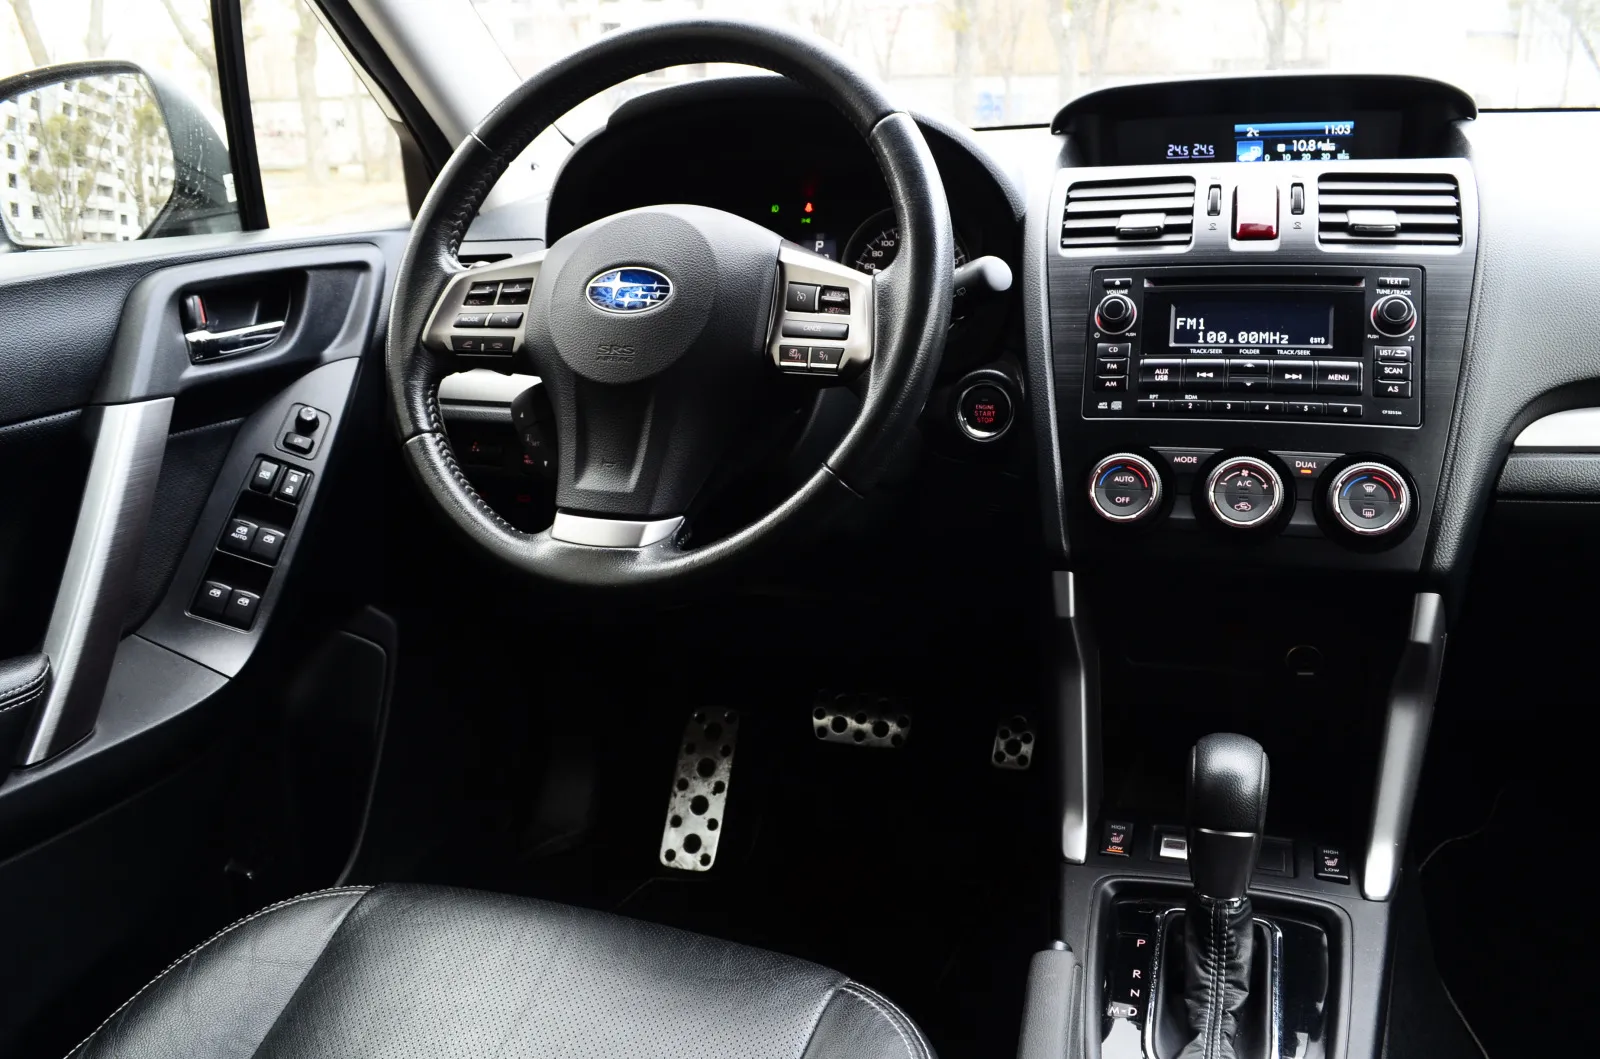 Subaru Forester 2013 купити авто в лізинг